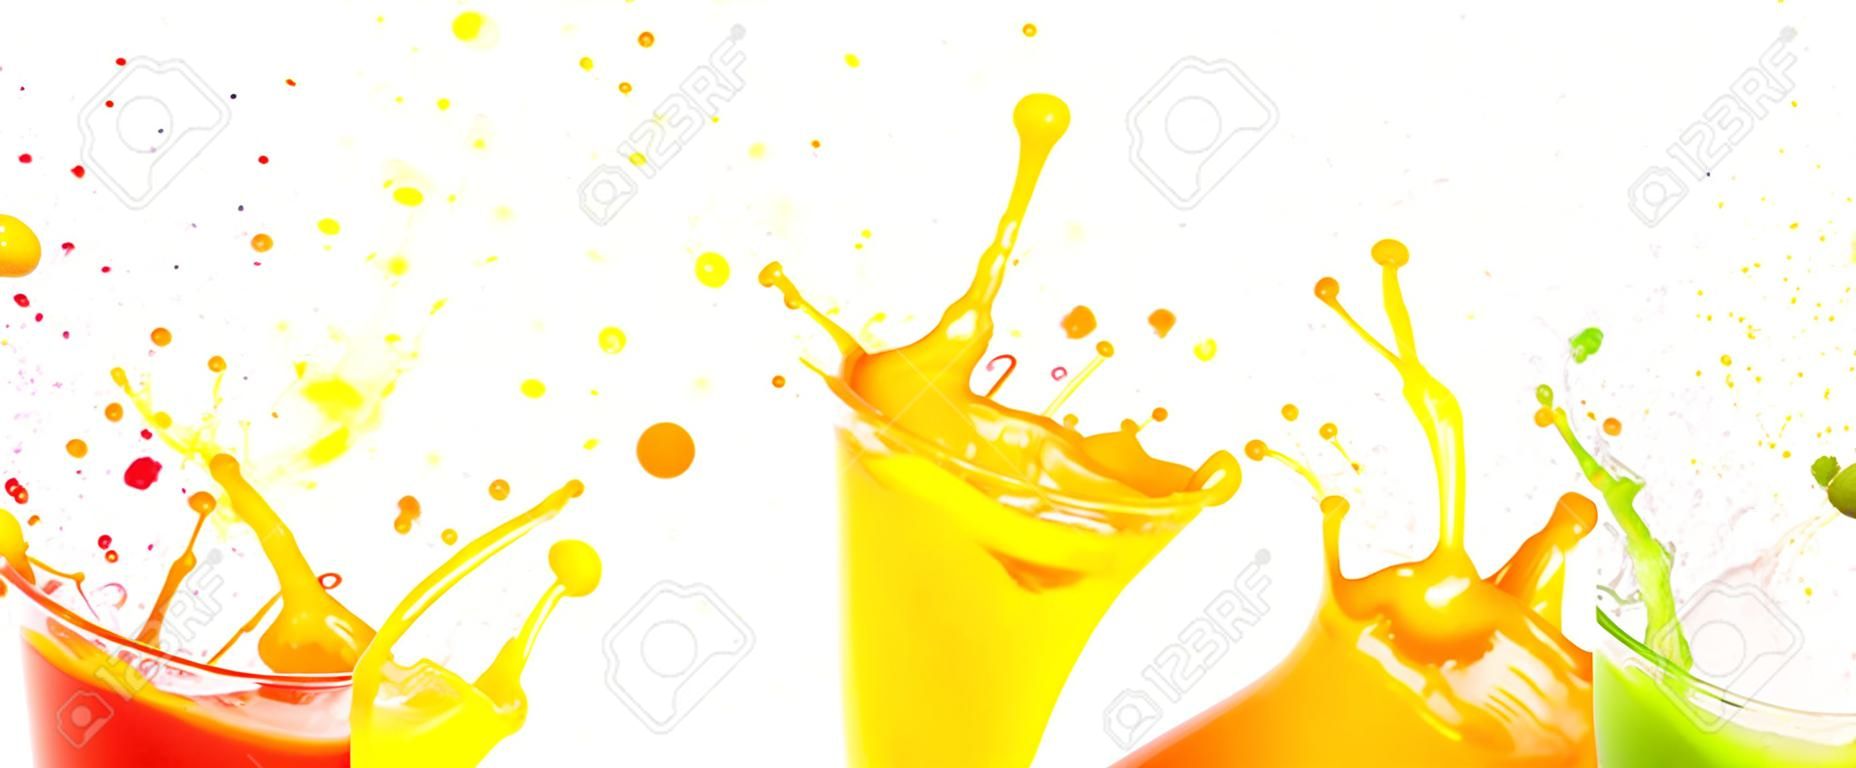 collection of fruit juice colorful splashes isolated on white background
